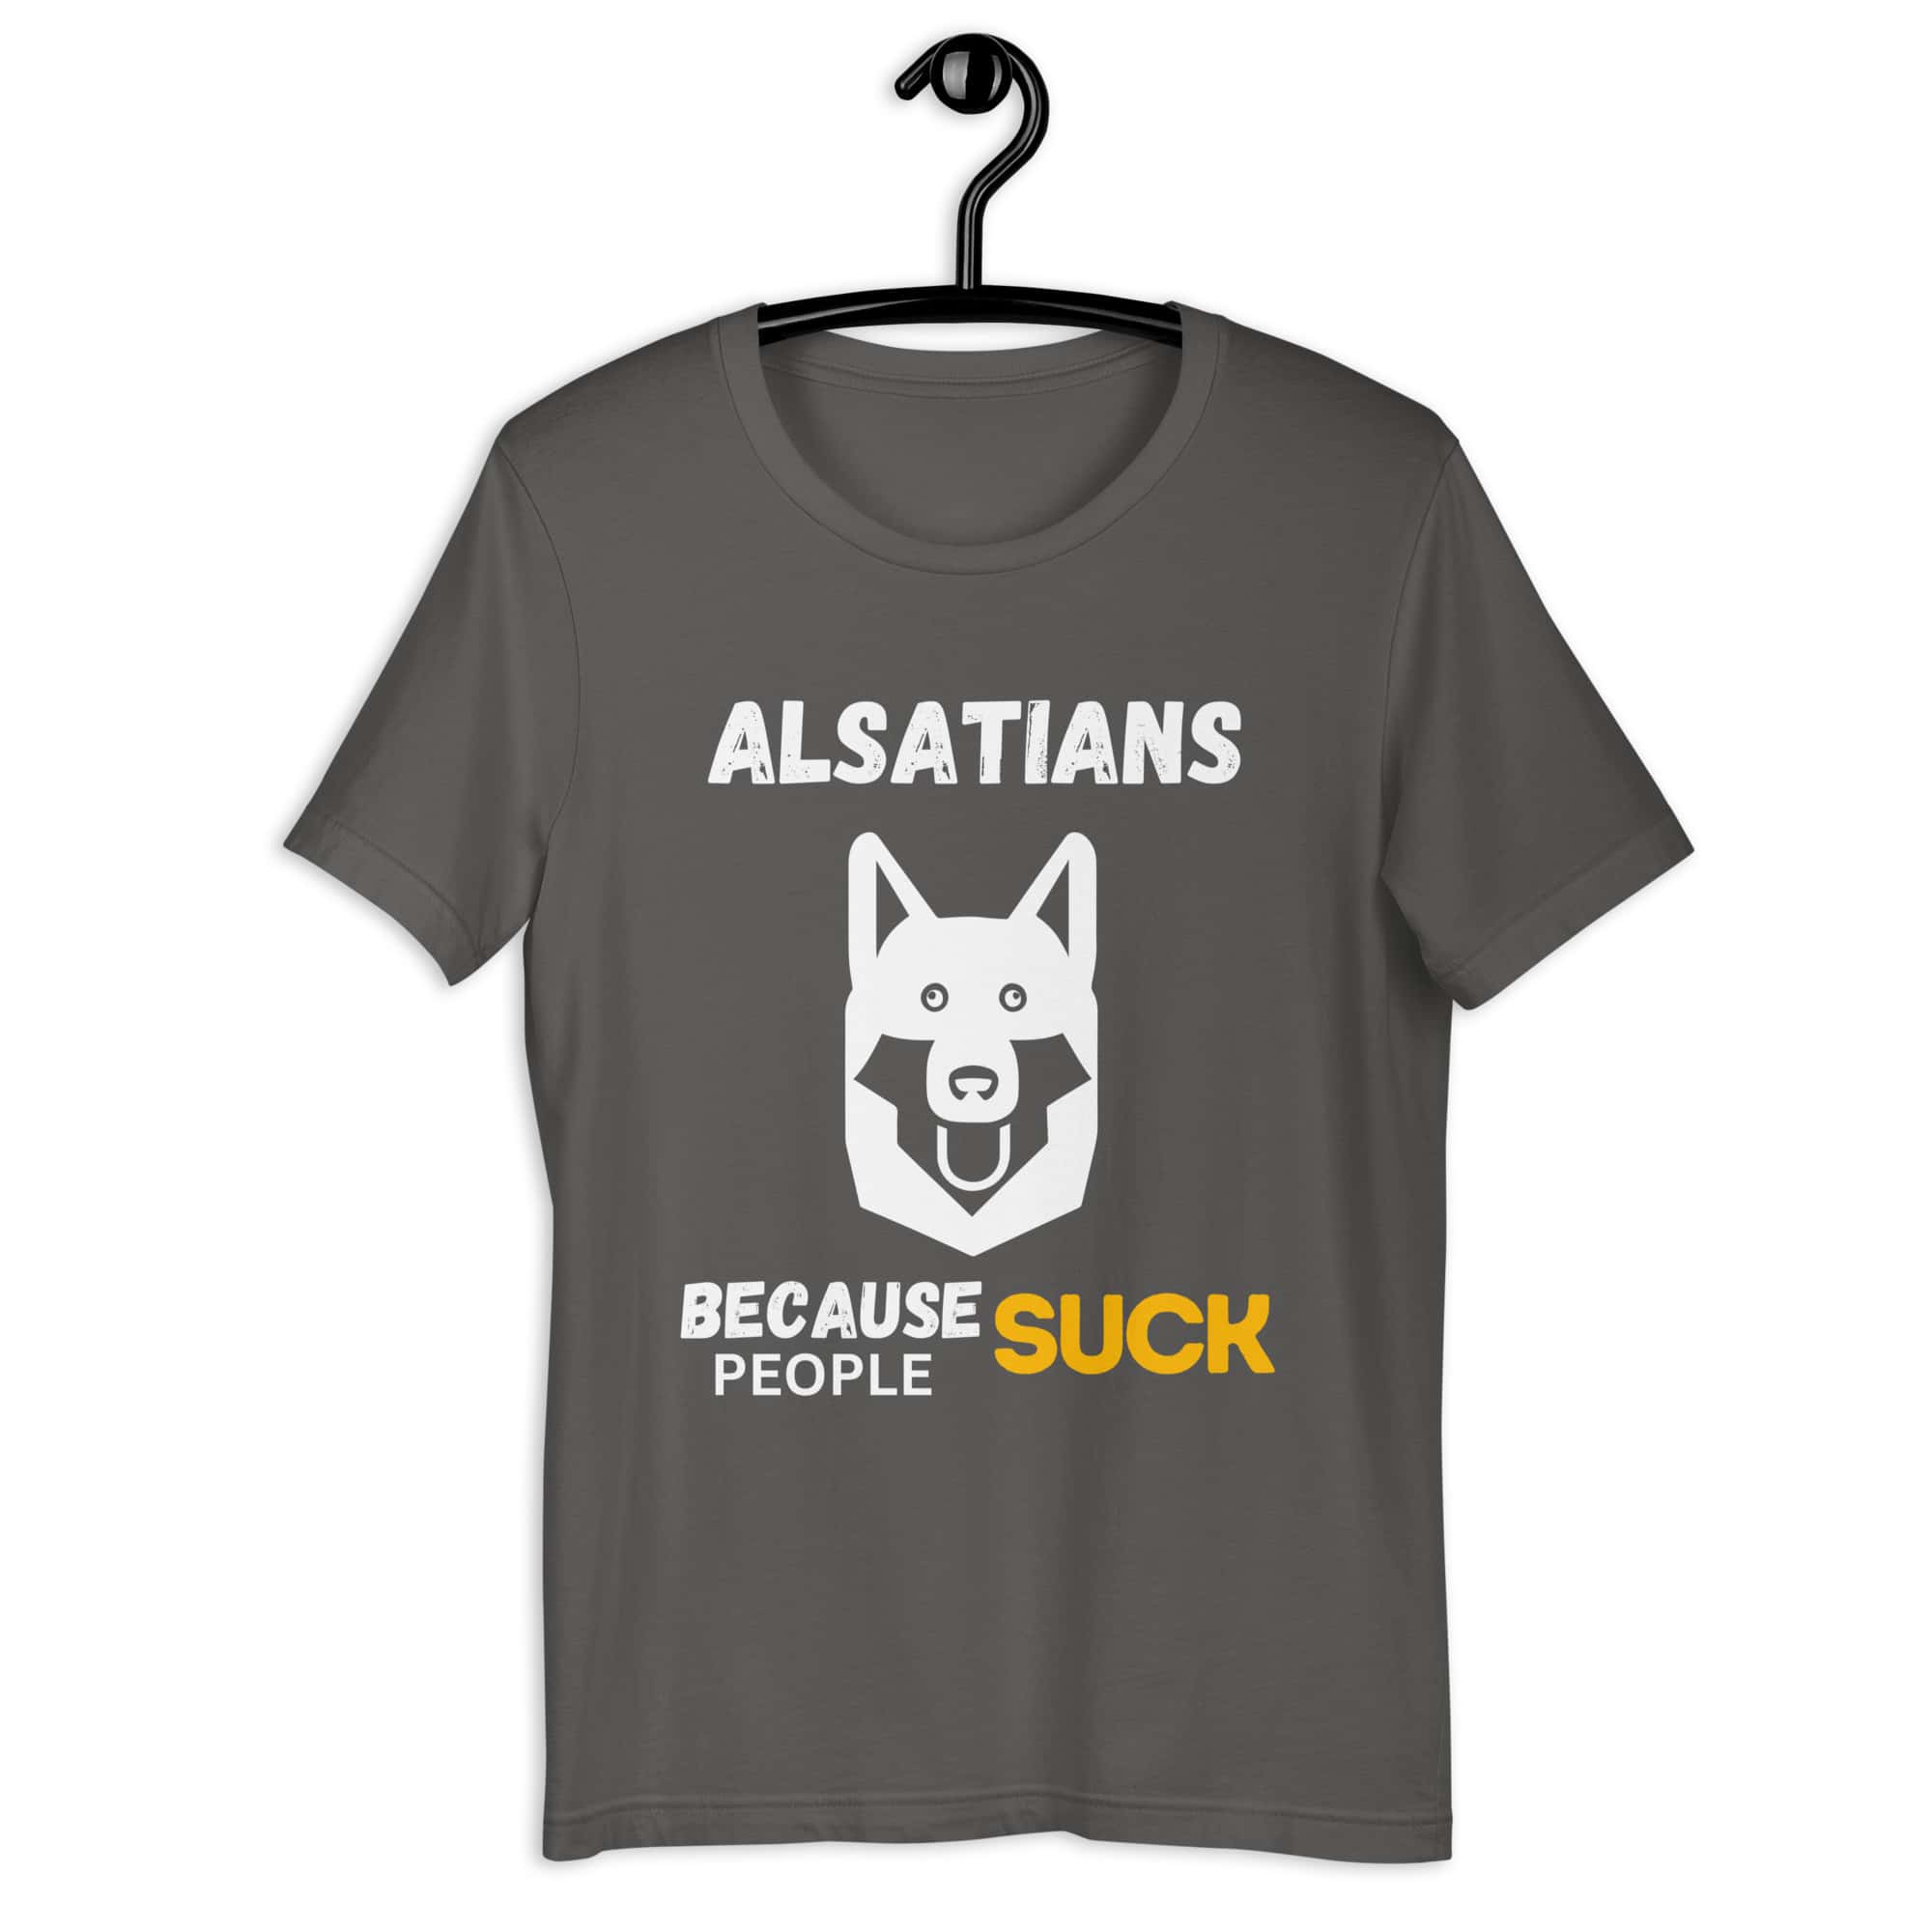 Alsatians Because People Suck Unisex T-Shirt gray